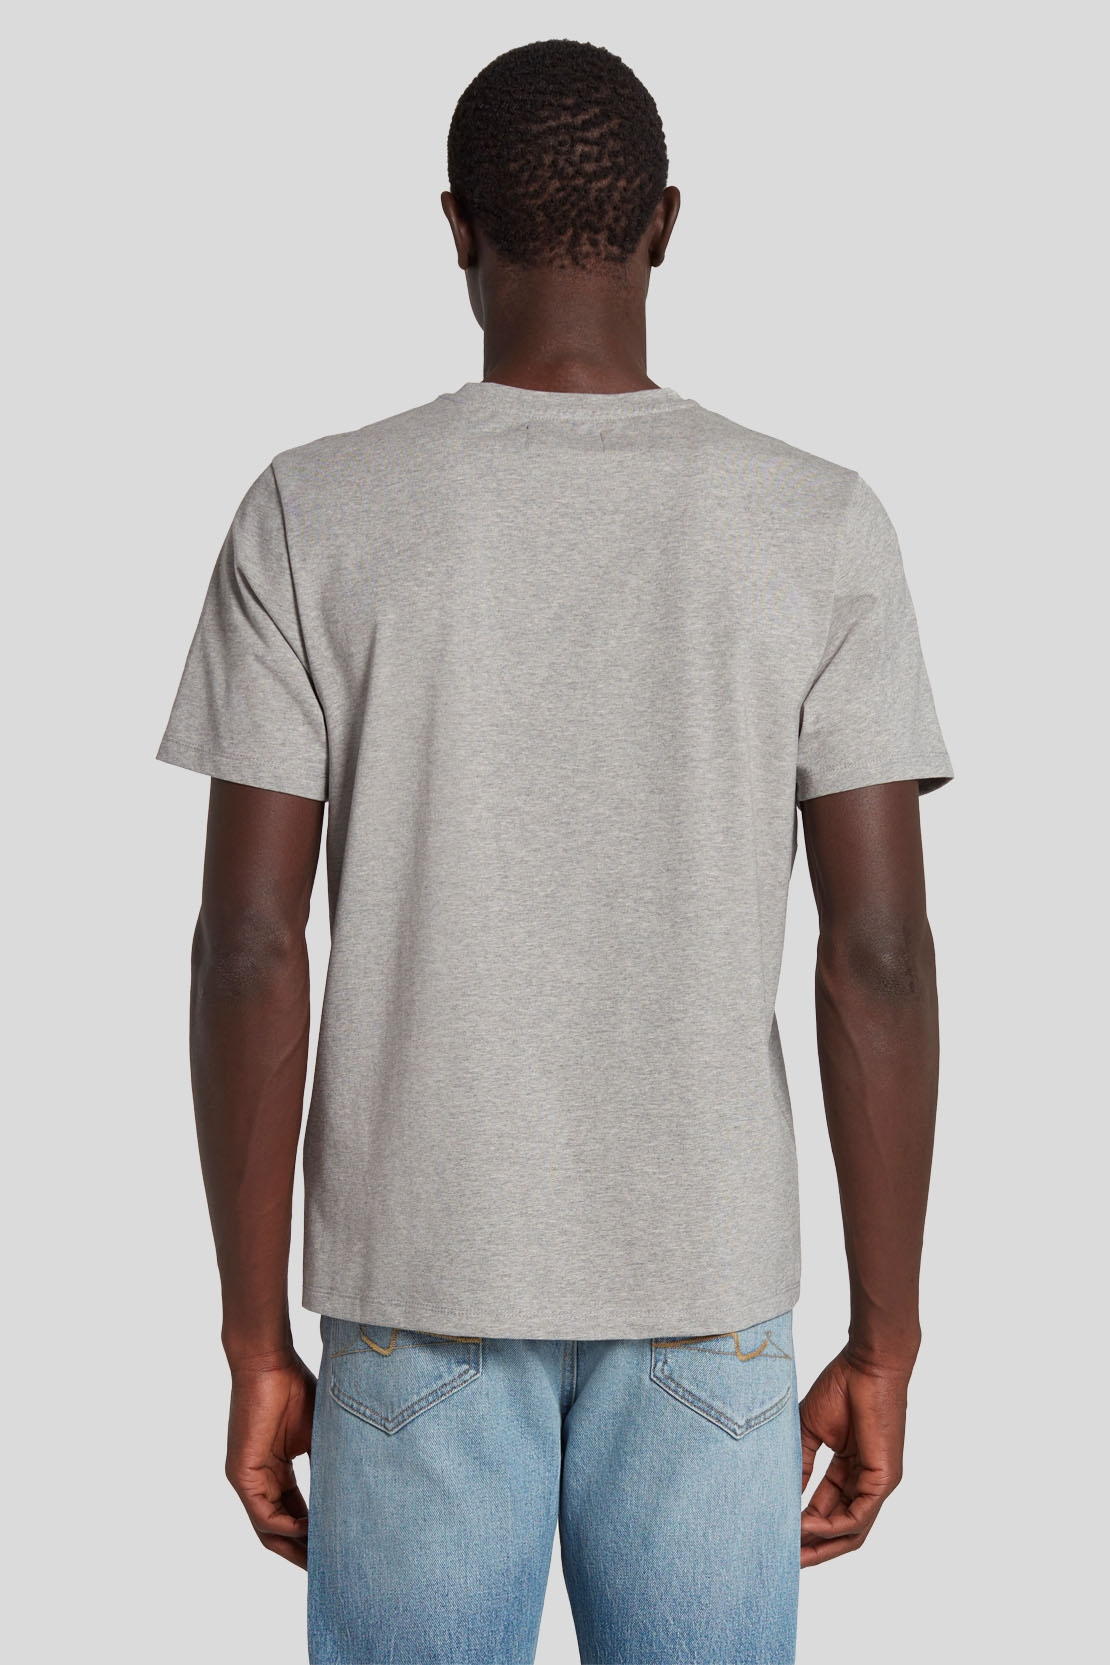 T-Shirt Luxe Performance Grey Melange_JSIM2370GM_GM_04